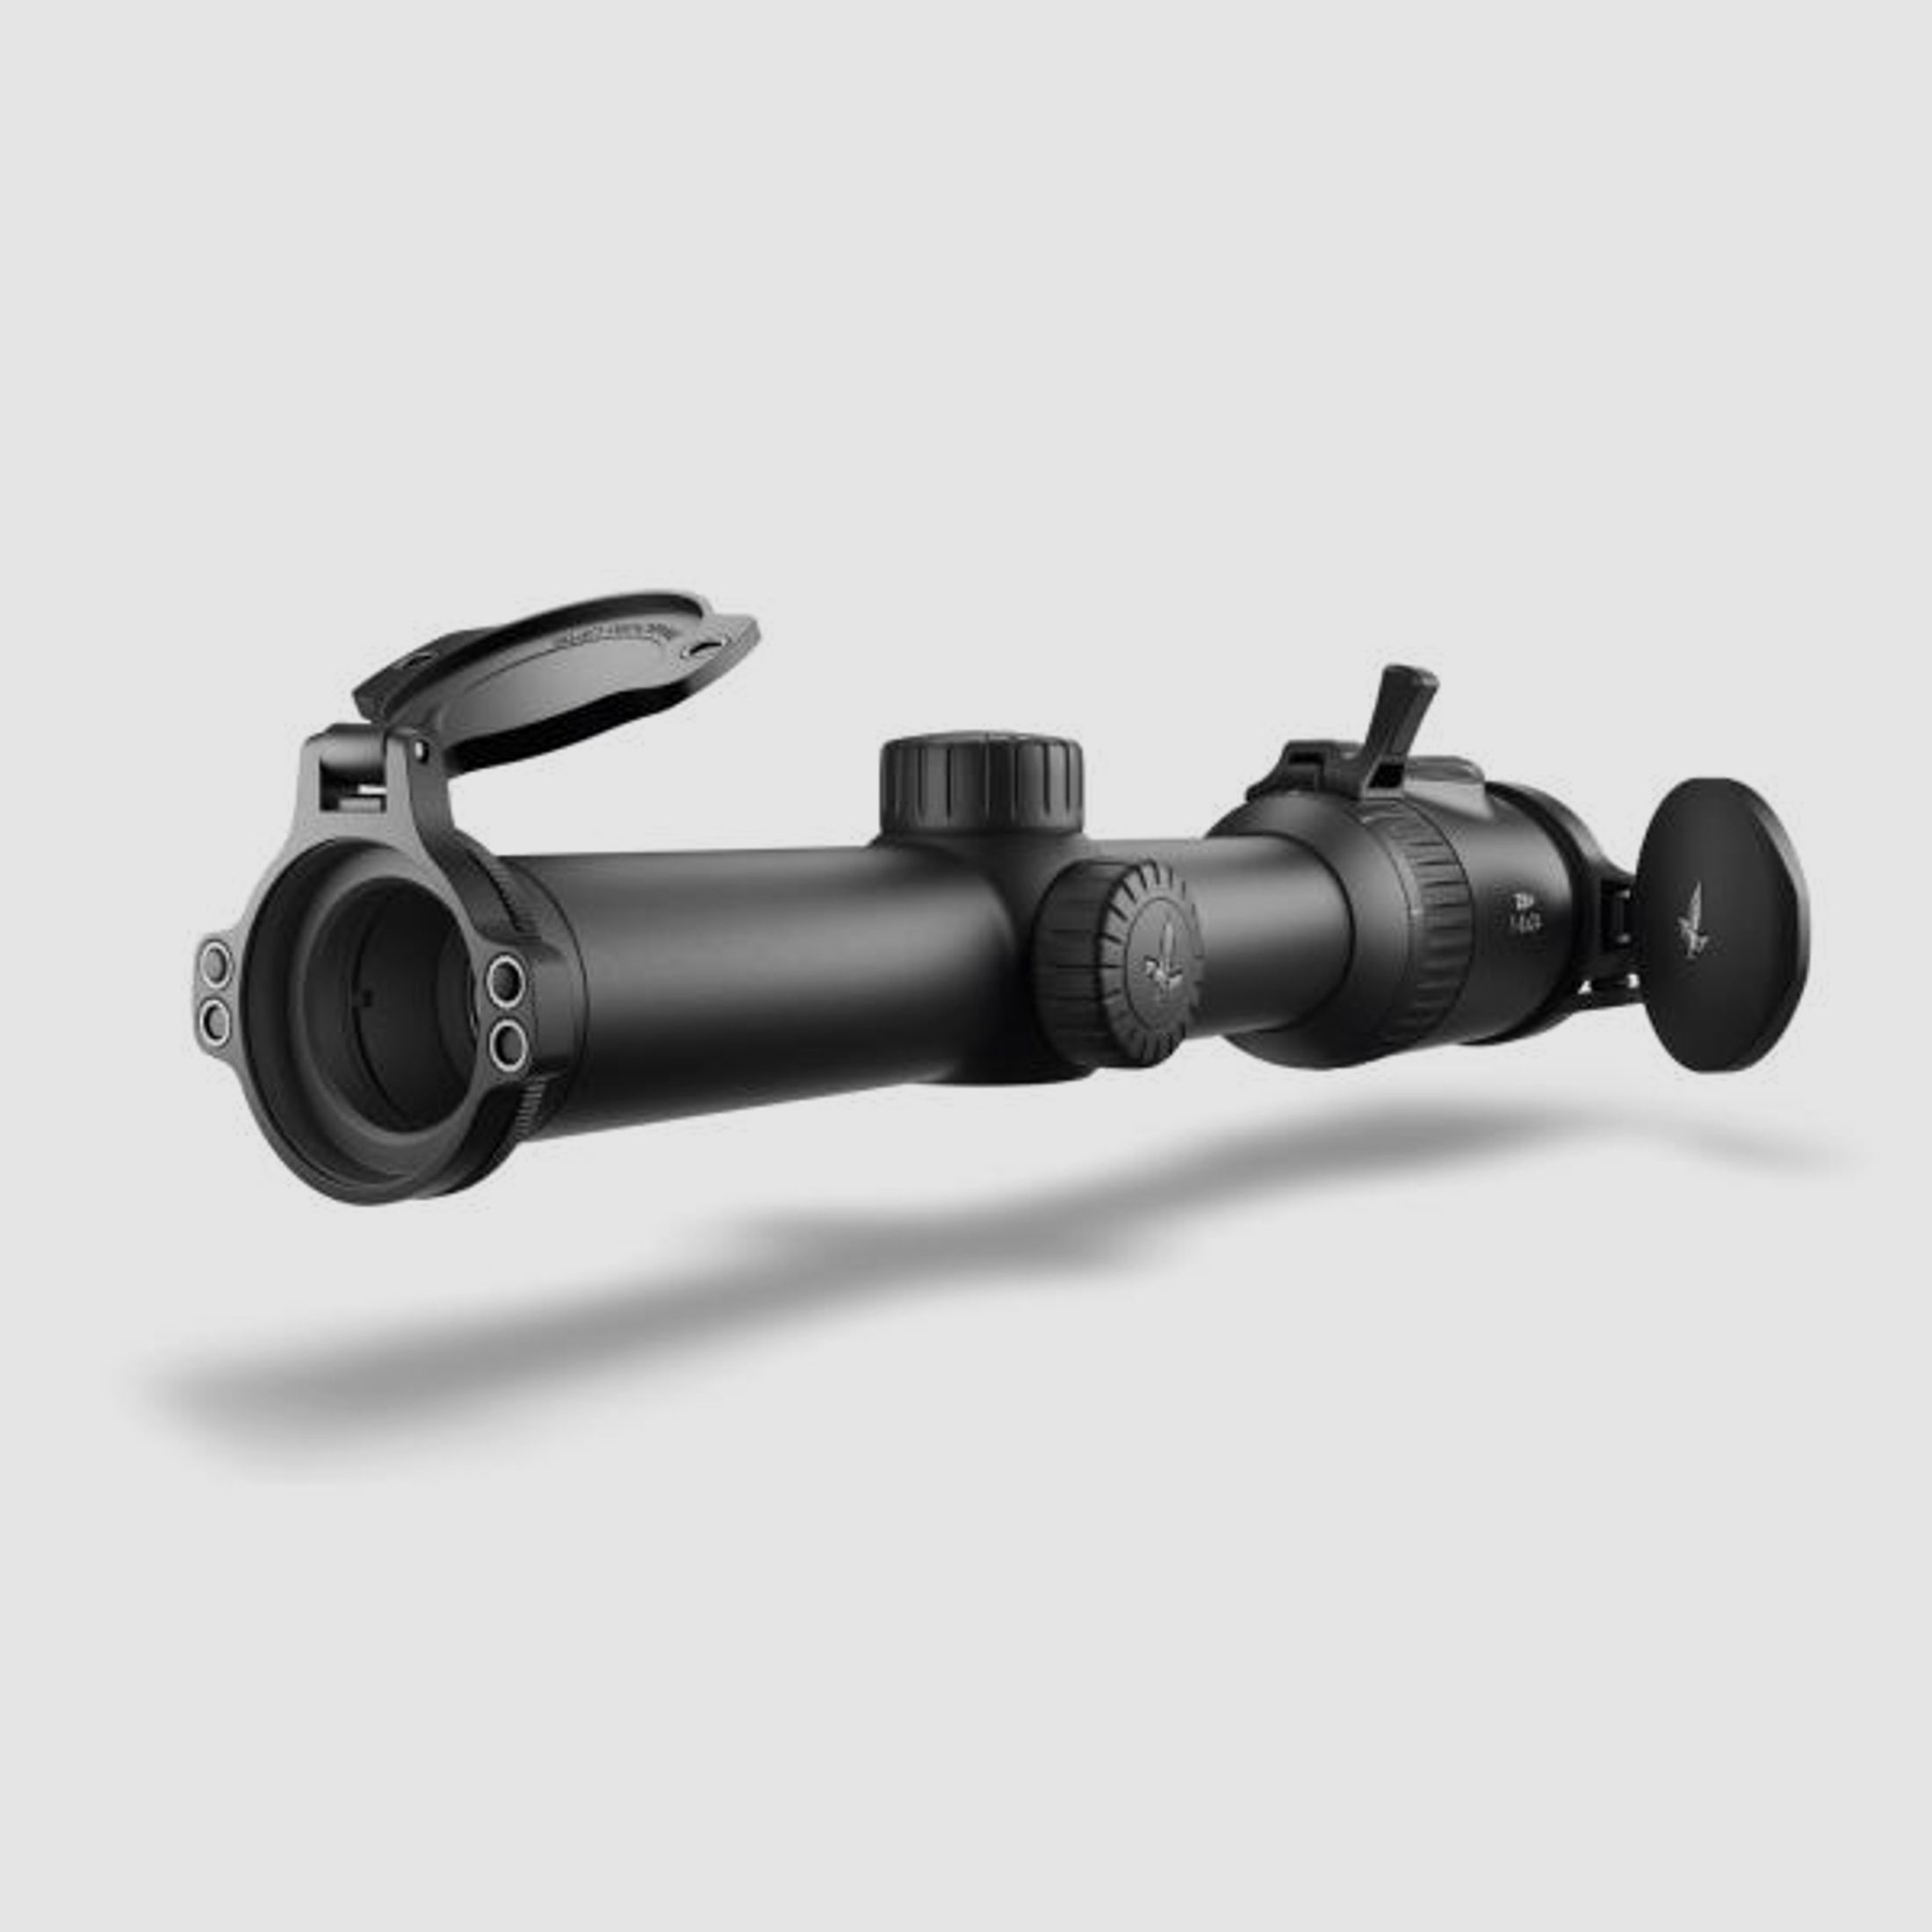 SWAROVSKI Zubehör für Zielfernrohre Objektivdeckel 24mm SLP-O-24+ f. Z8i+